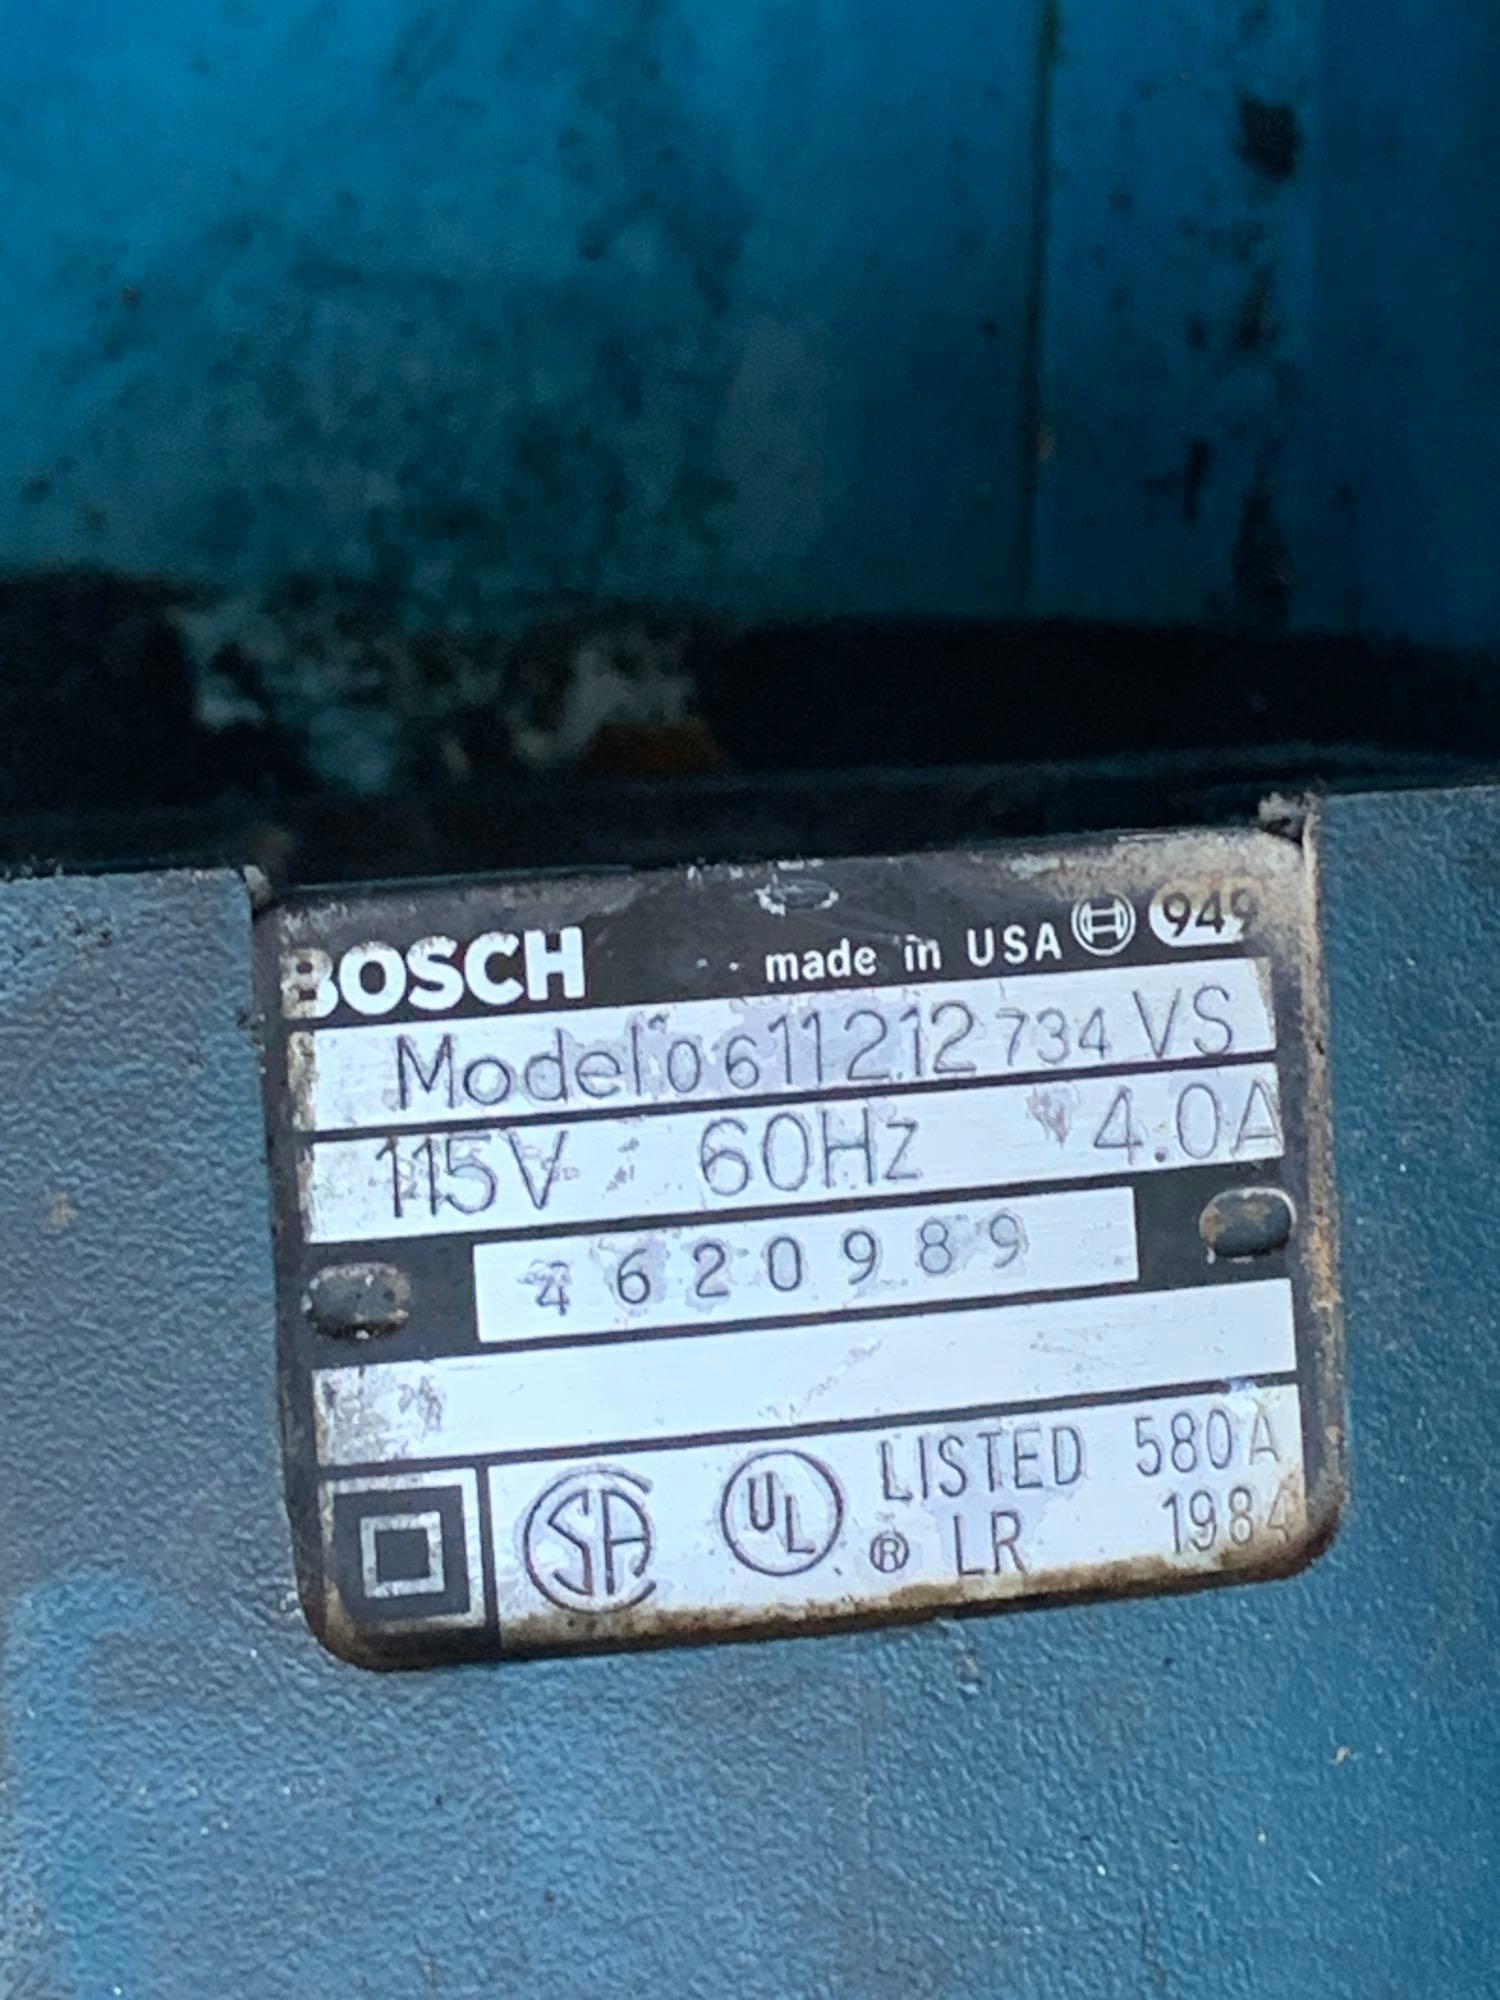 Bosch Drill & Black & Decker Drywall Drill